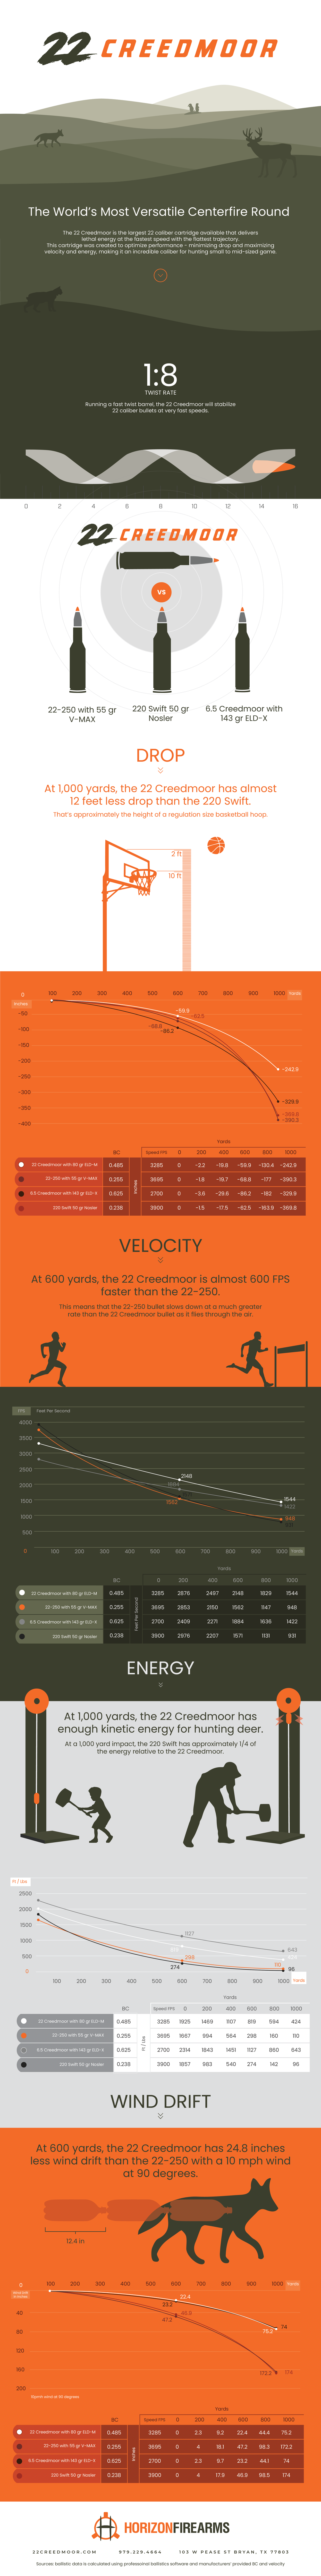 22 Creedmoor Infographic